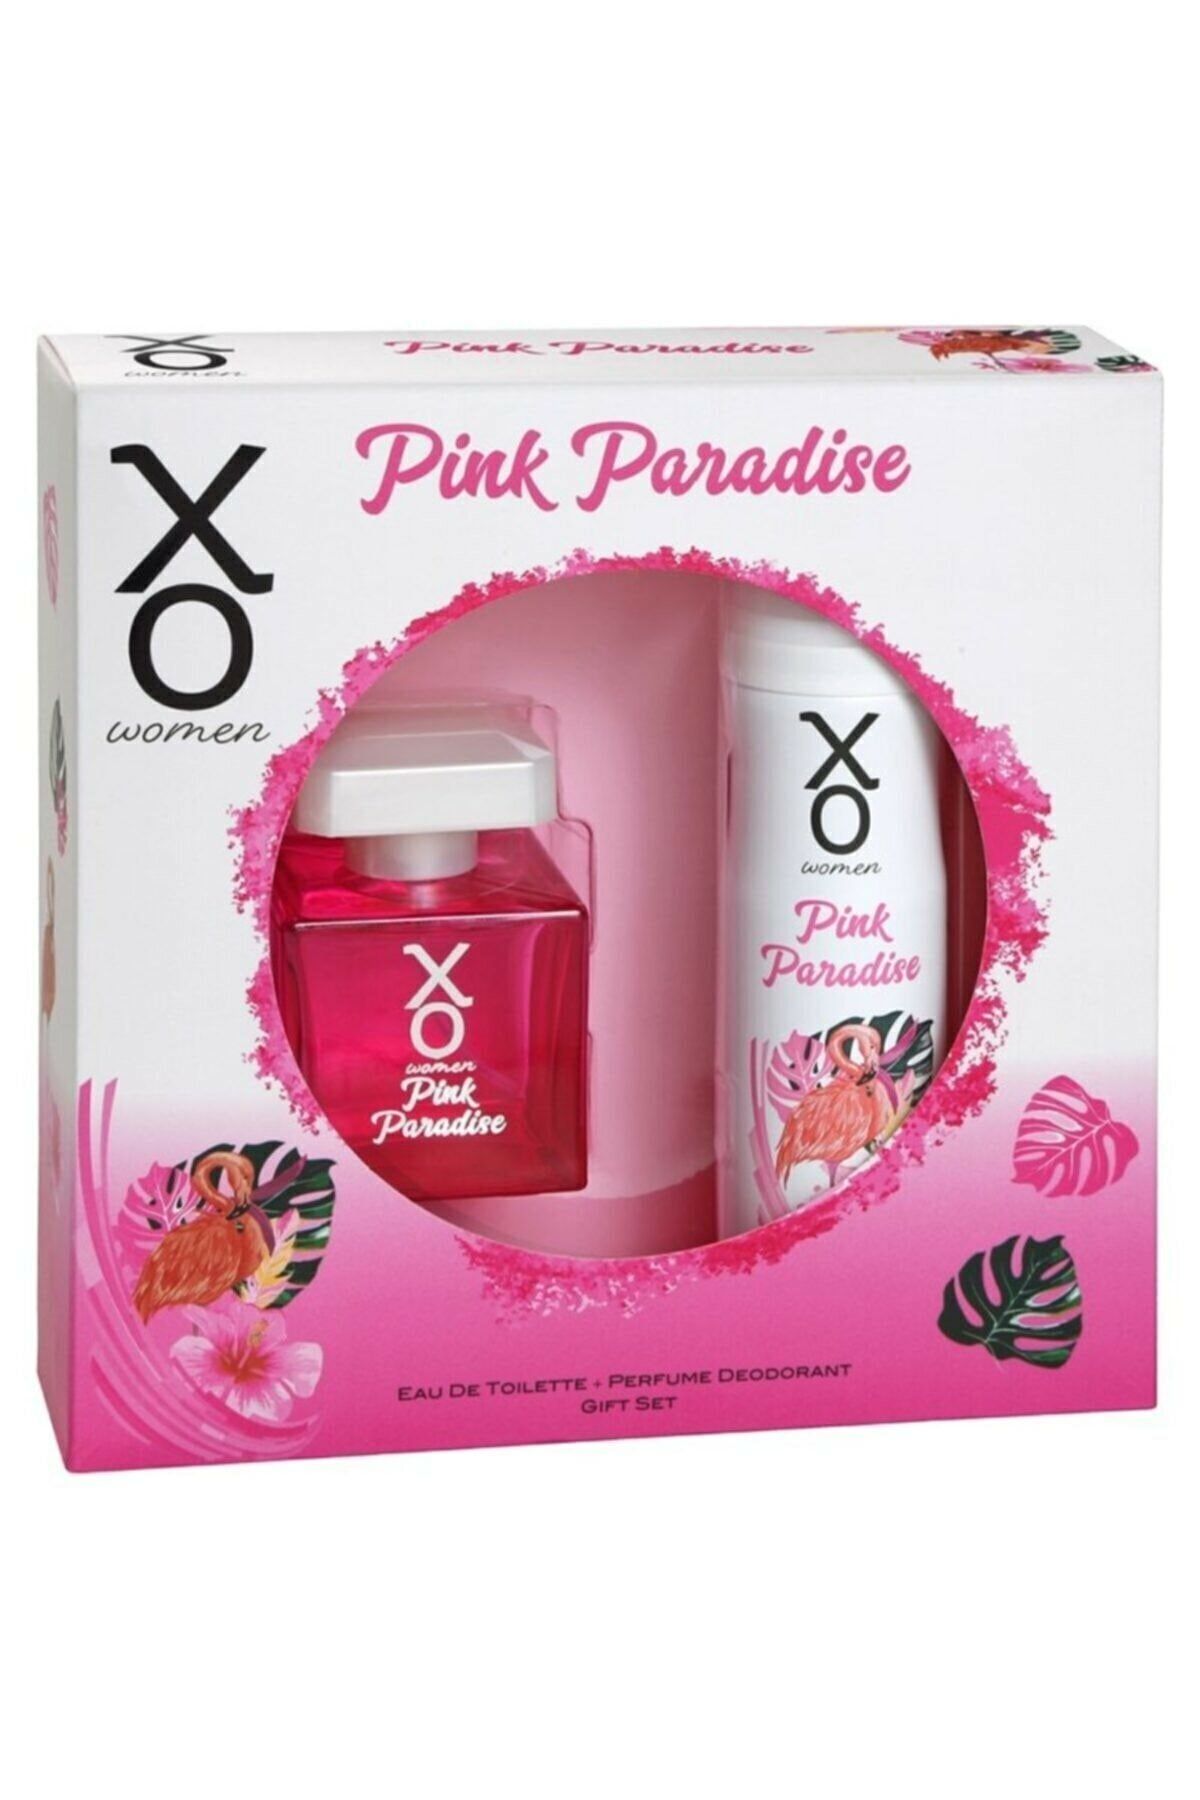 XQ Xo Pink Paradise Women Edt Kadın Parfüm 100 Ml + Deo